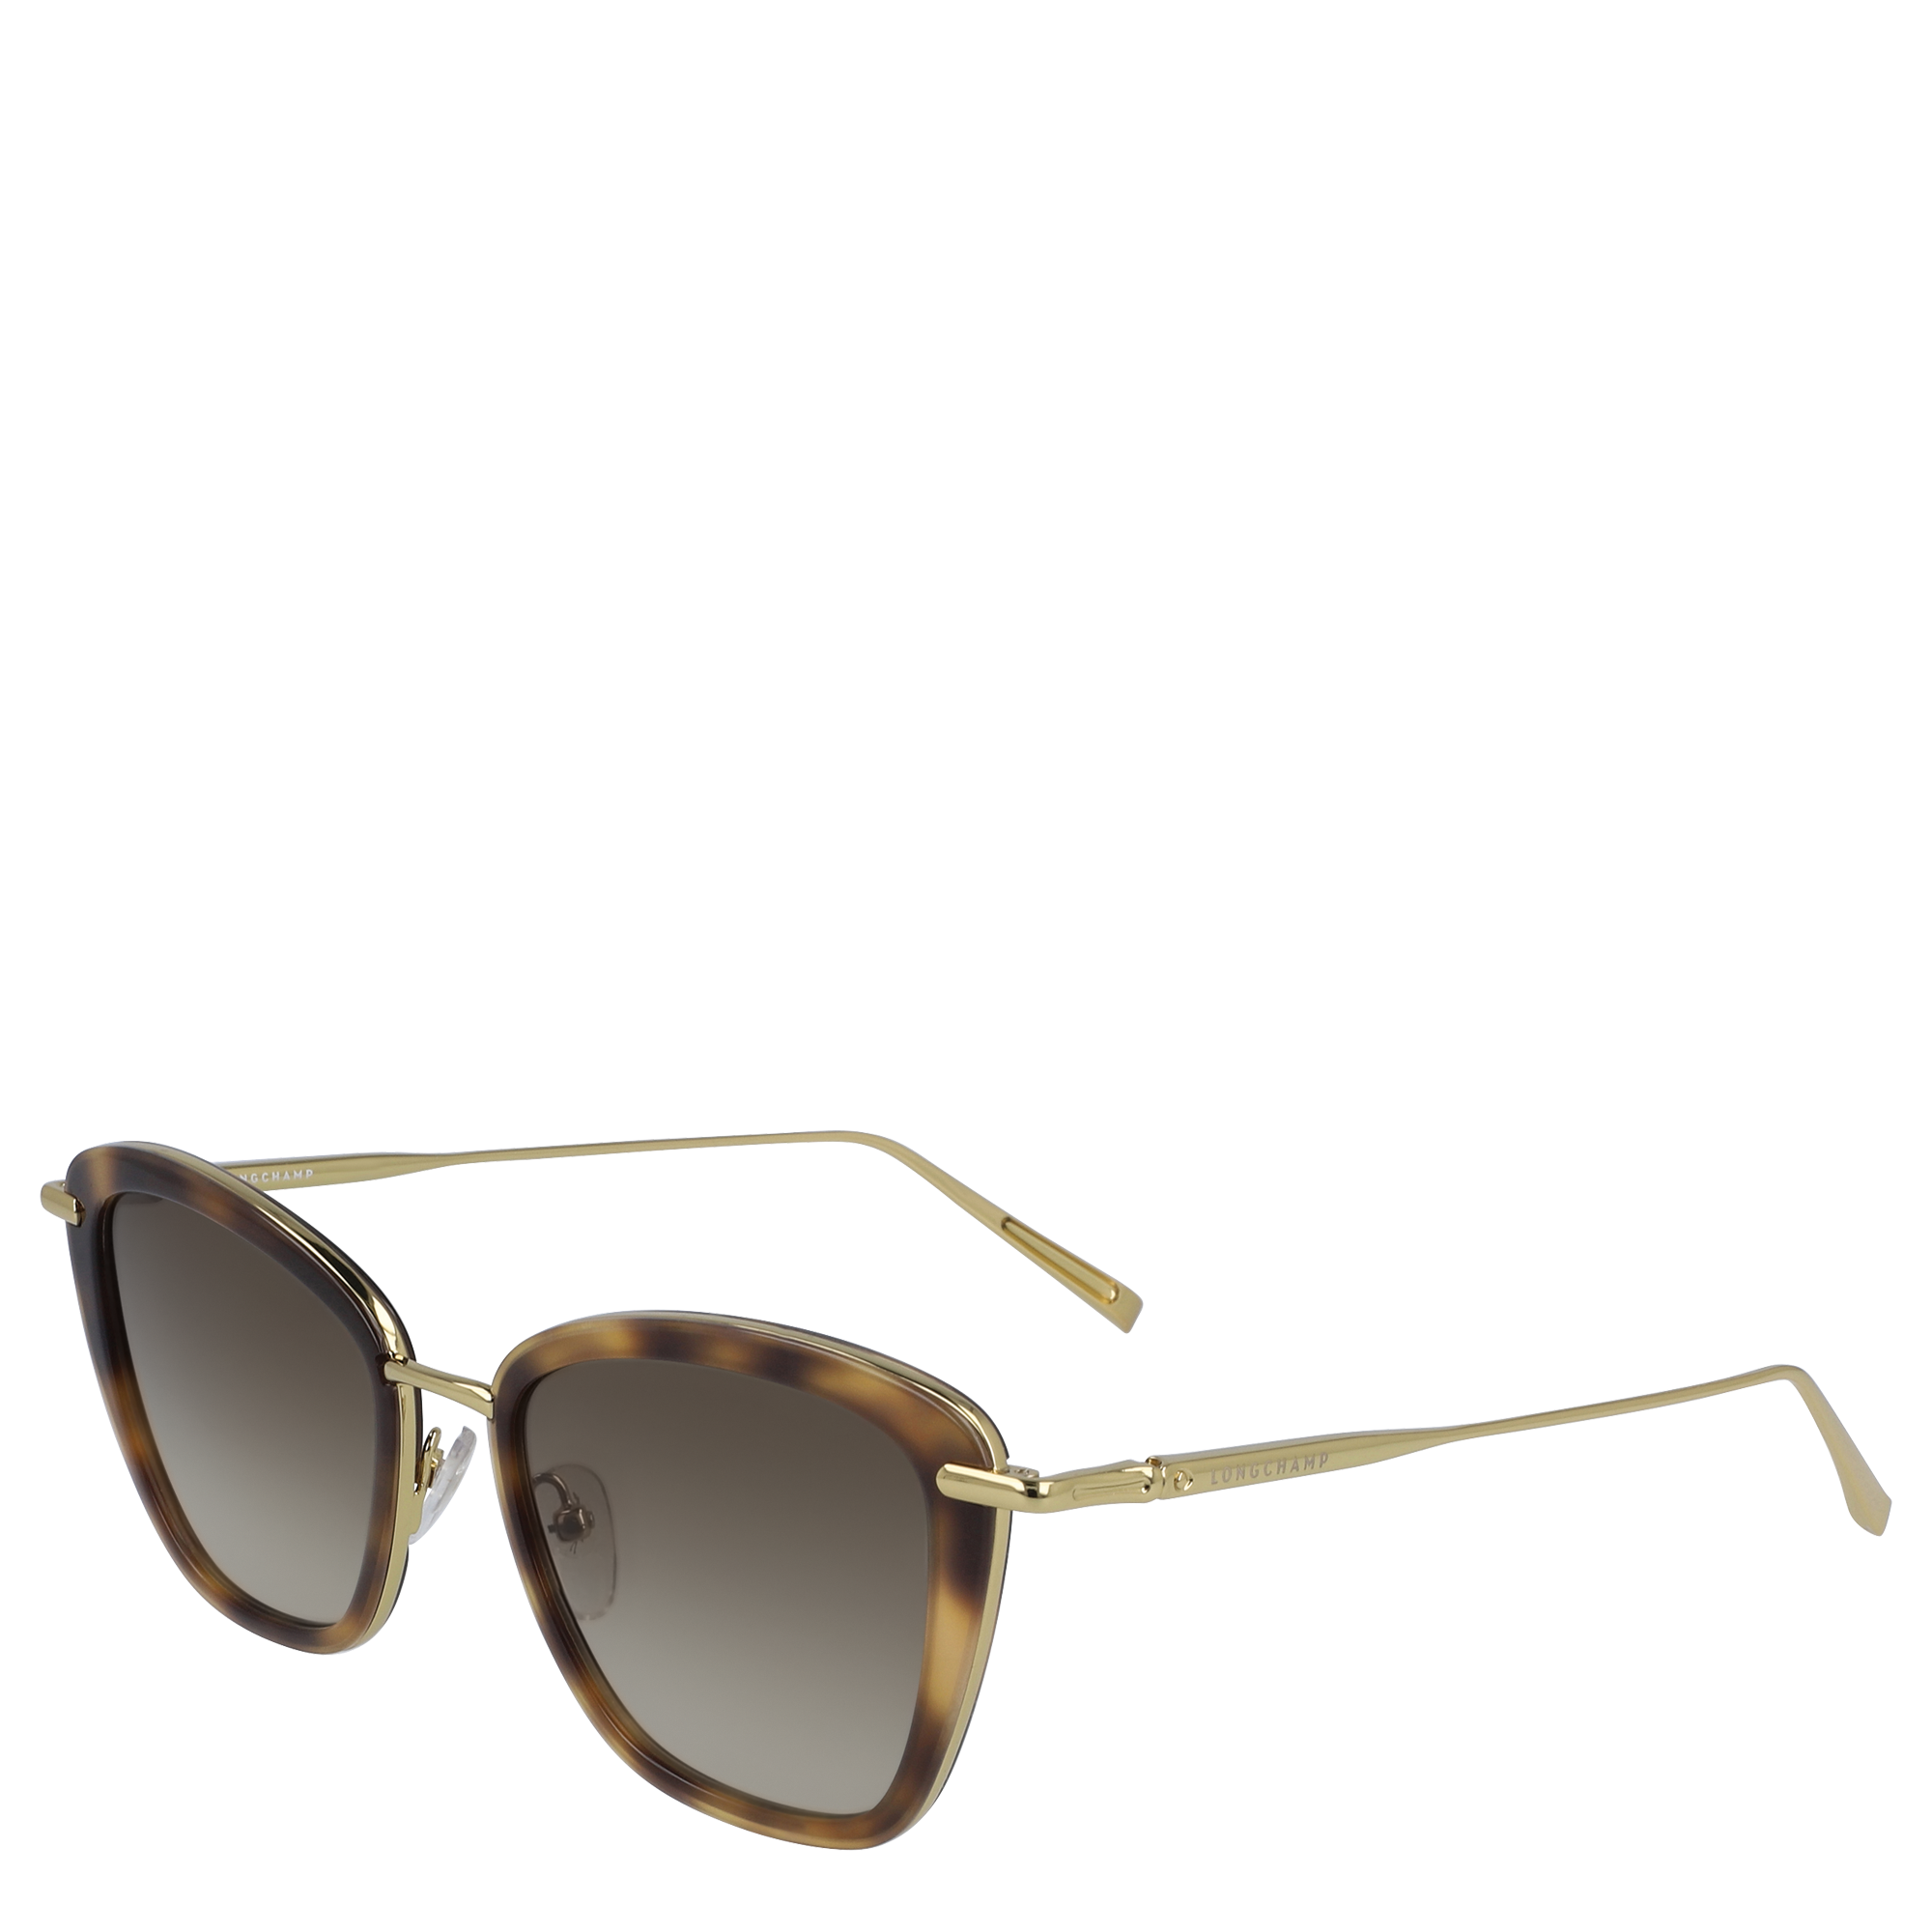 longchamp sunglasses review